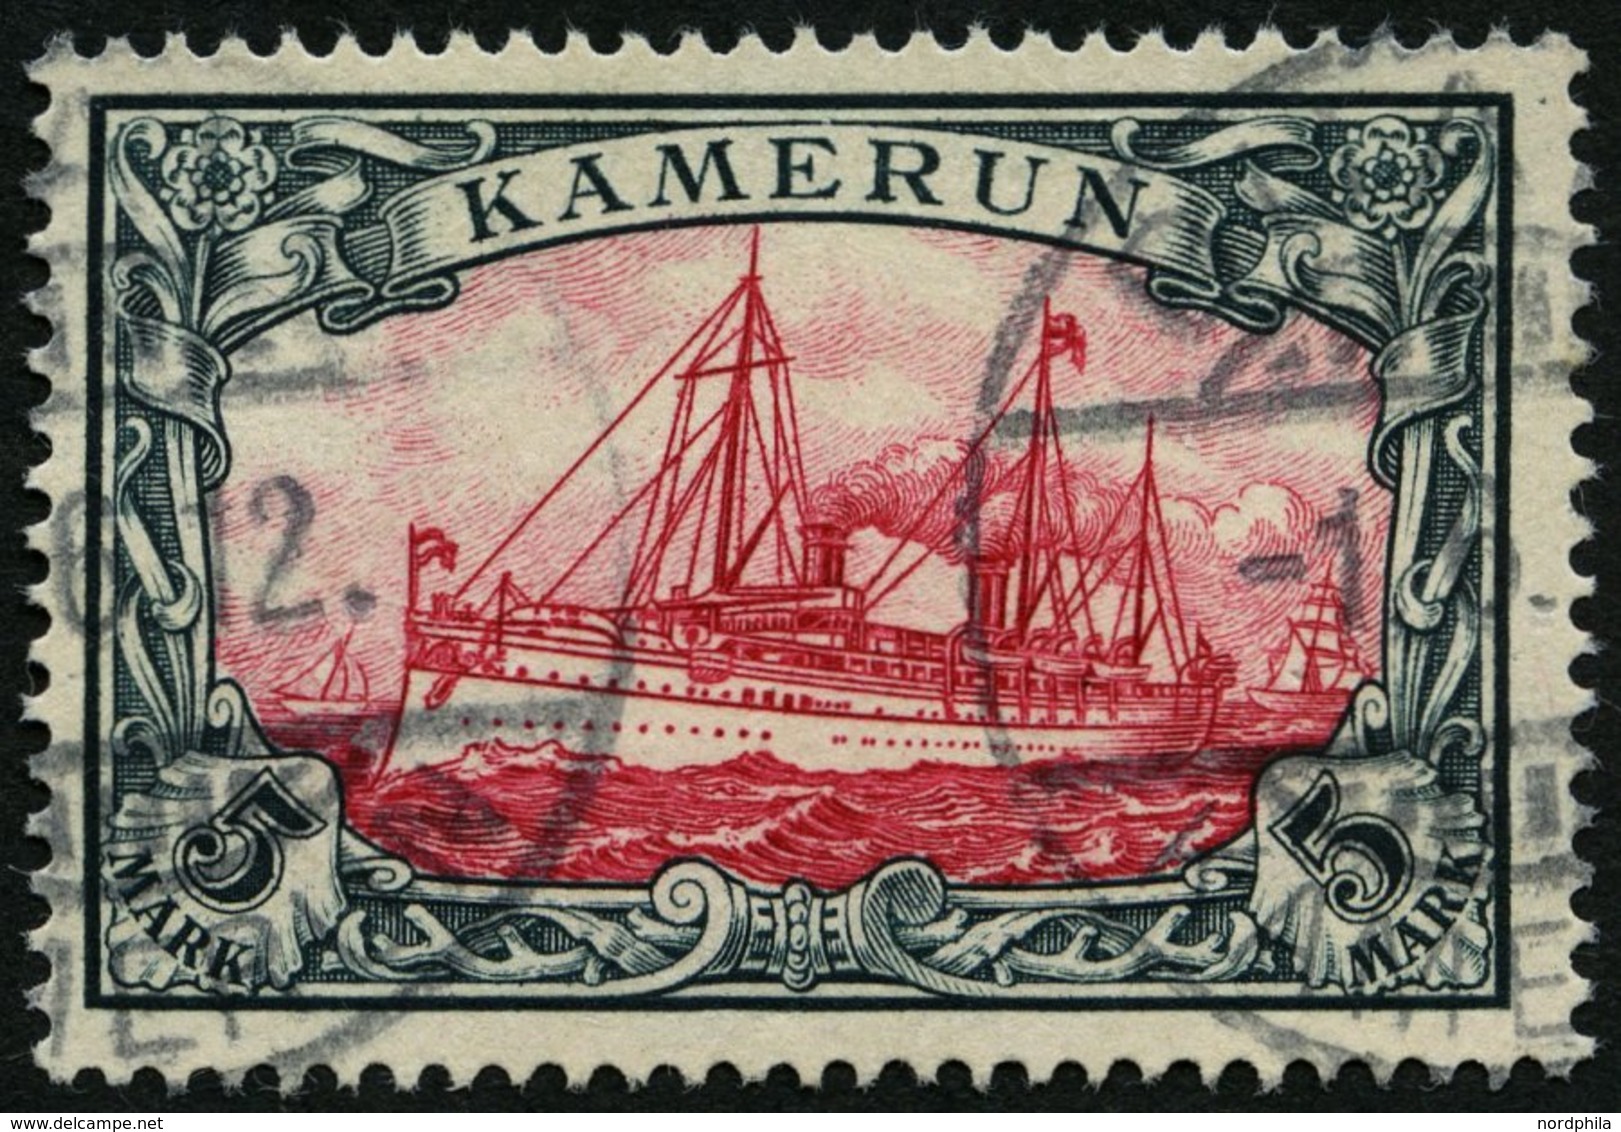 KAMERUN 19 O, 1900, 5 M. Grünschwarz/bräunlichkarmin, Ohne Wz., Pracht, Mi. 600.- - Cameroun